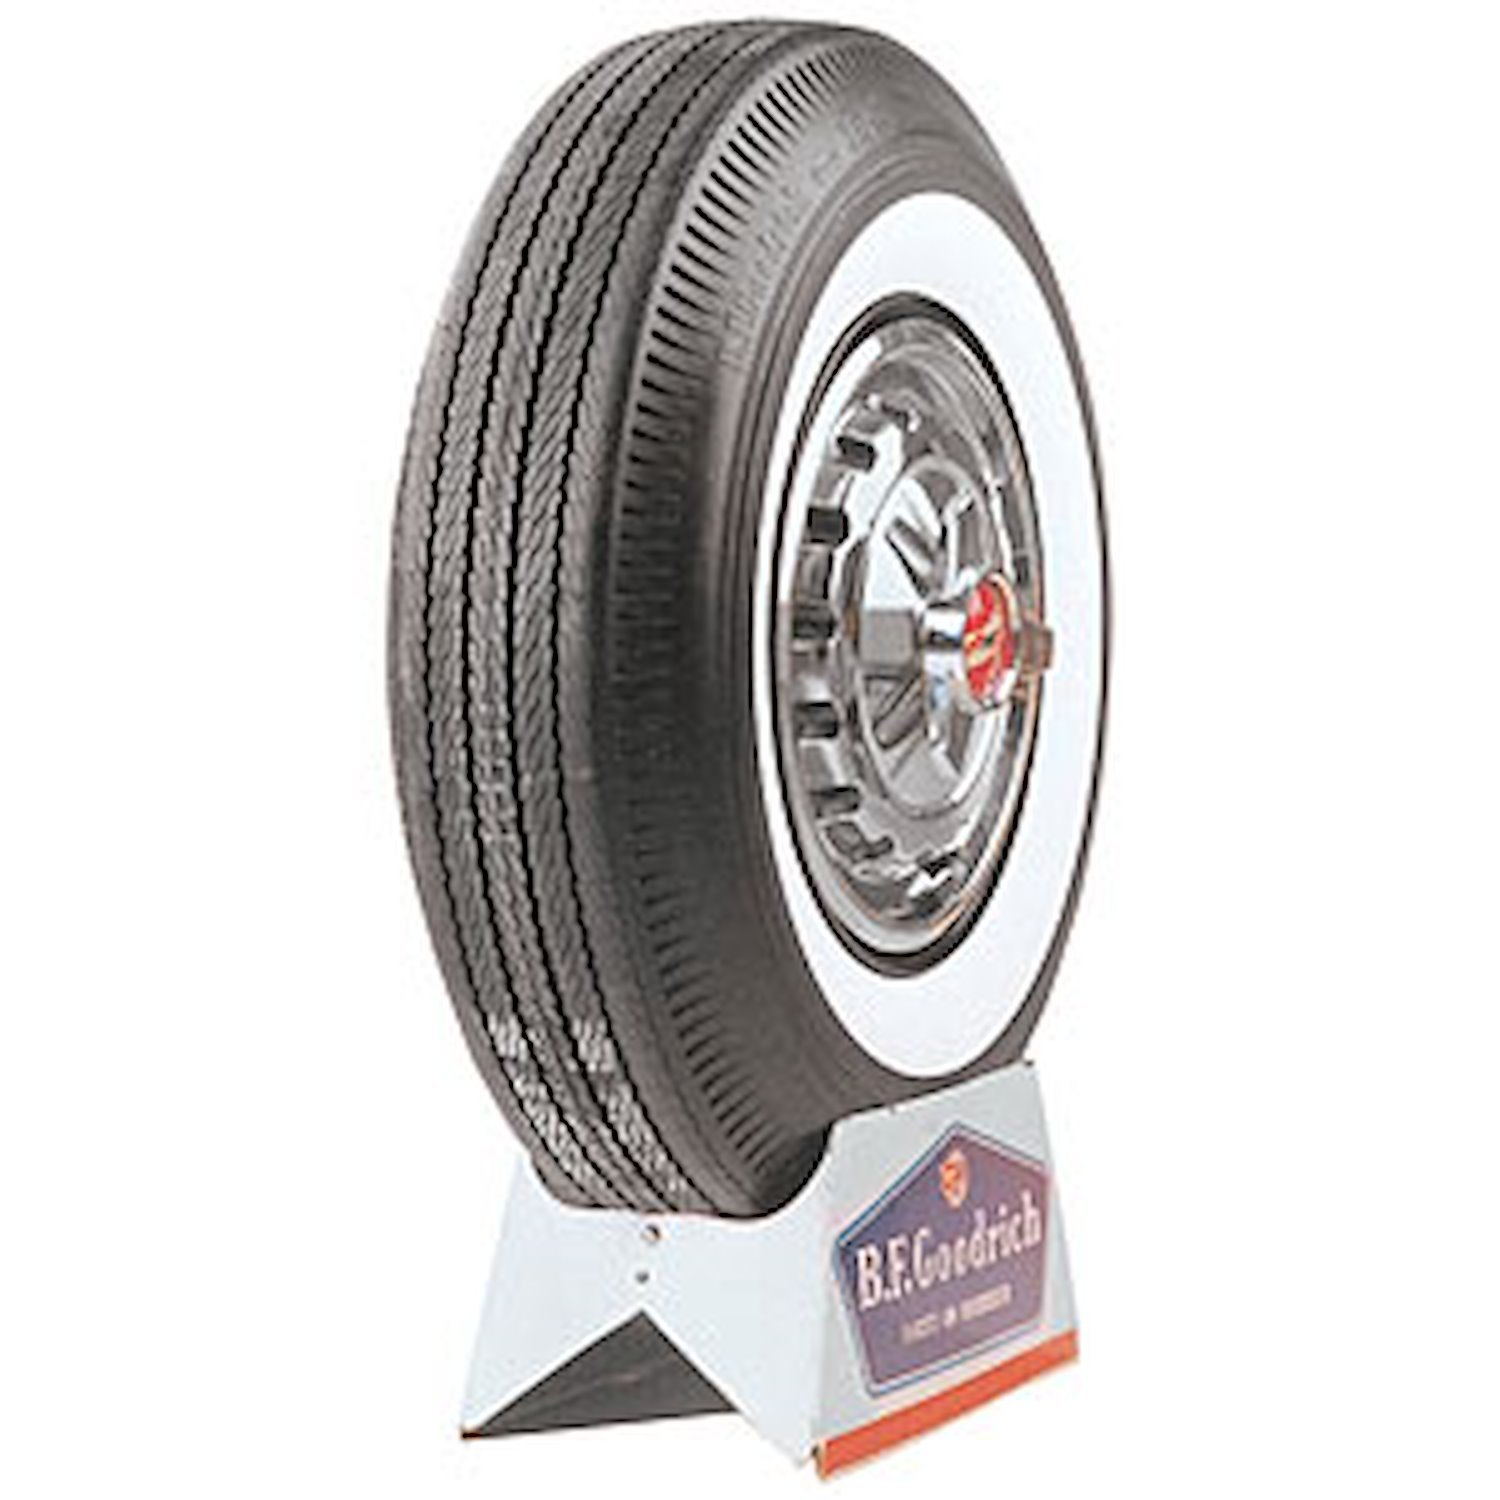 BFGoodrich Silvertown Whitewall Bias Ply Tire 800-14   ( 4.58" x 27.58" - 14" )